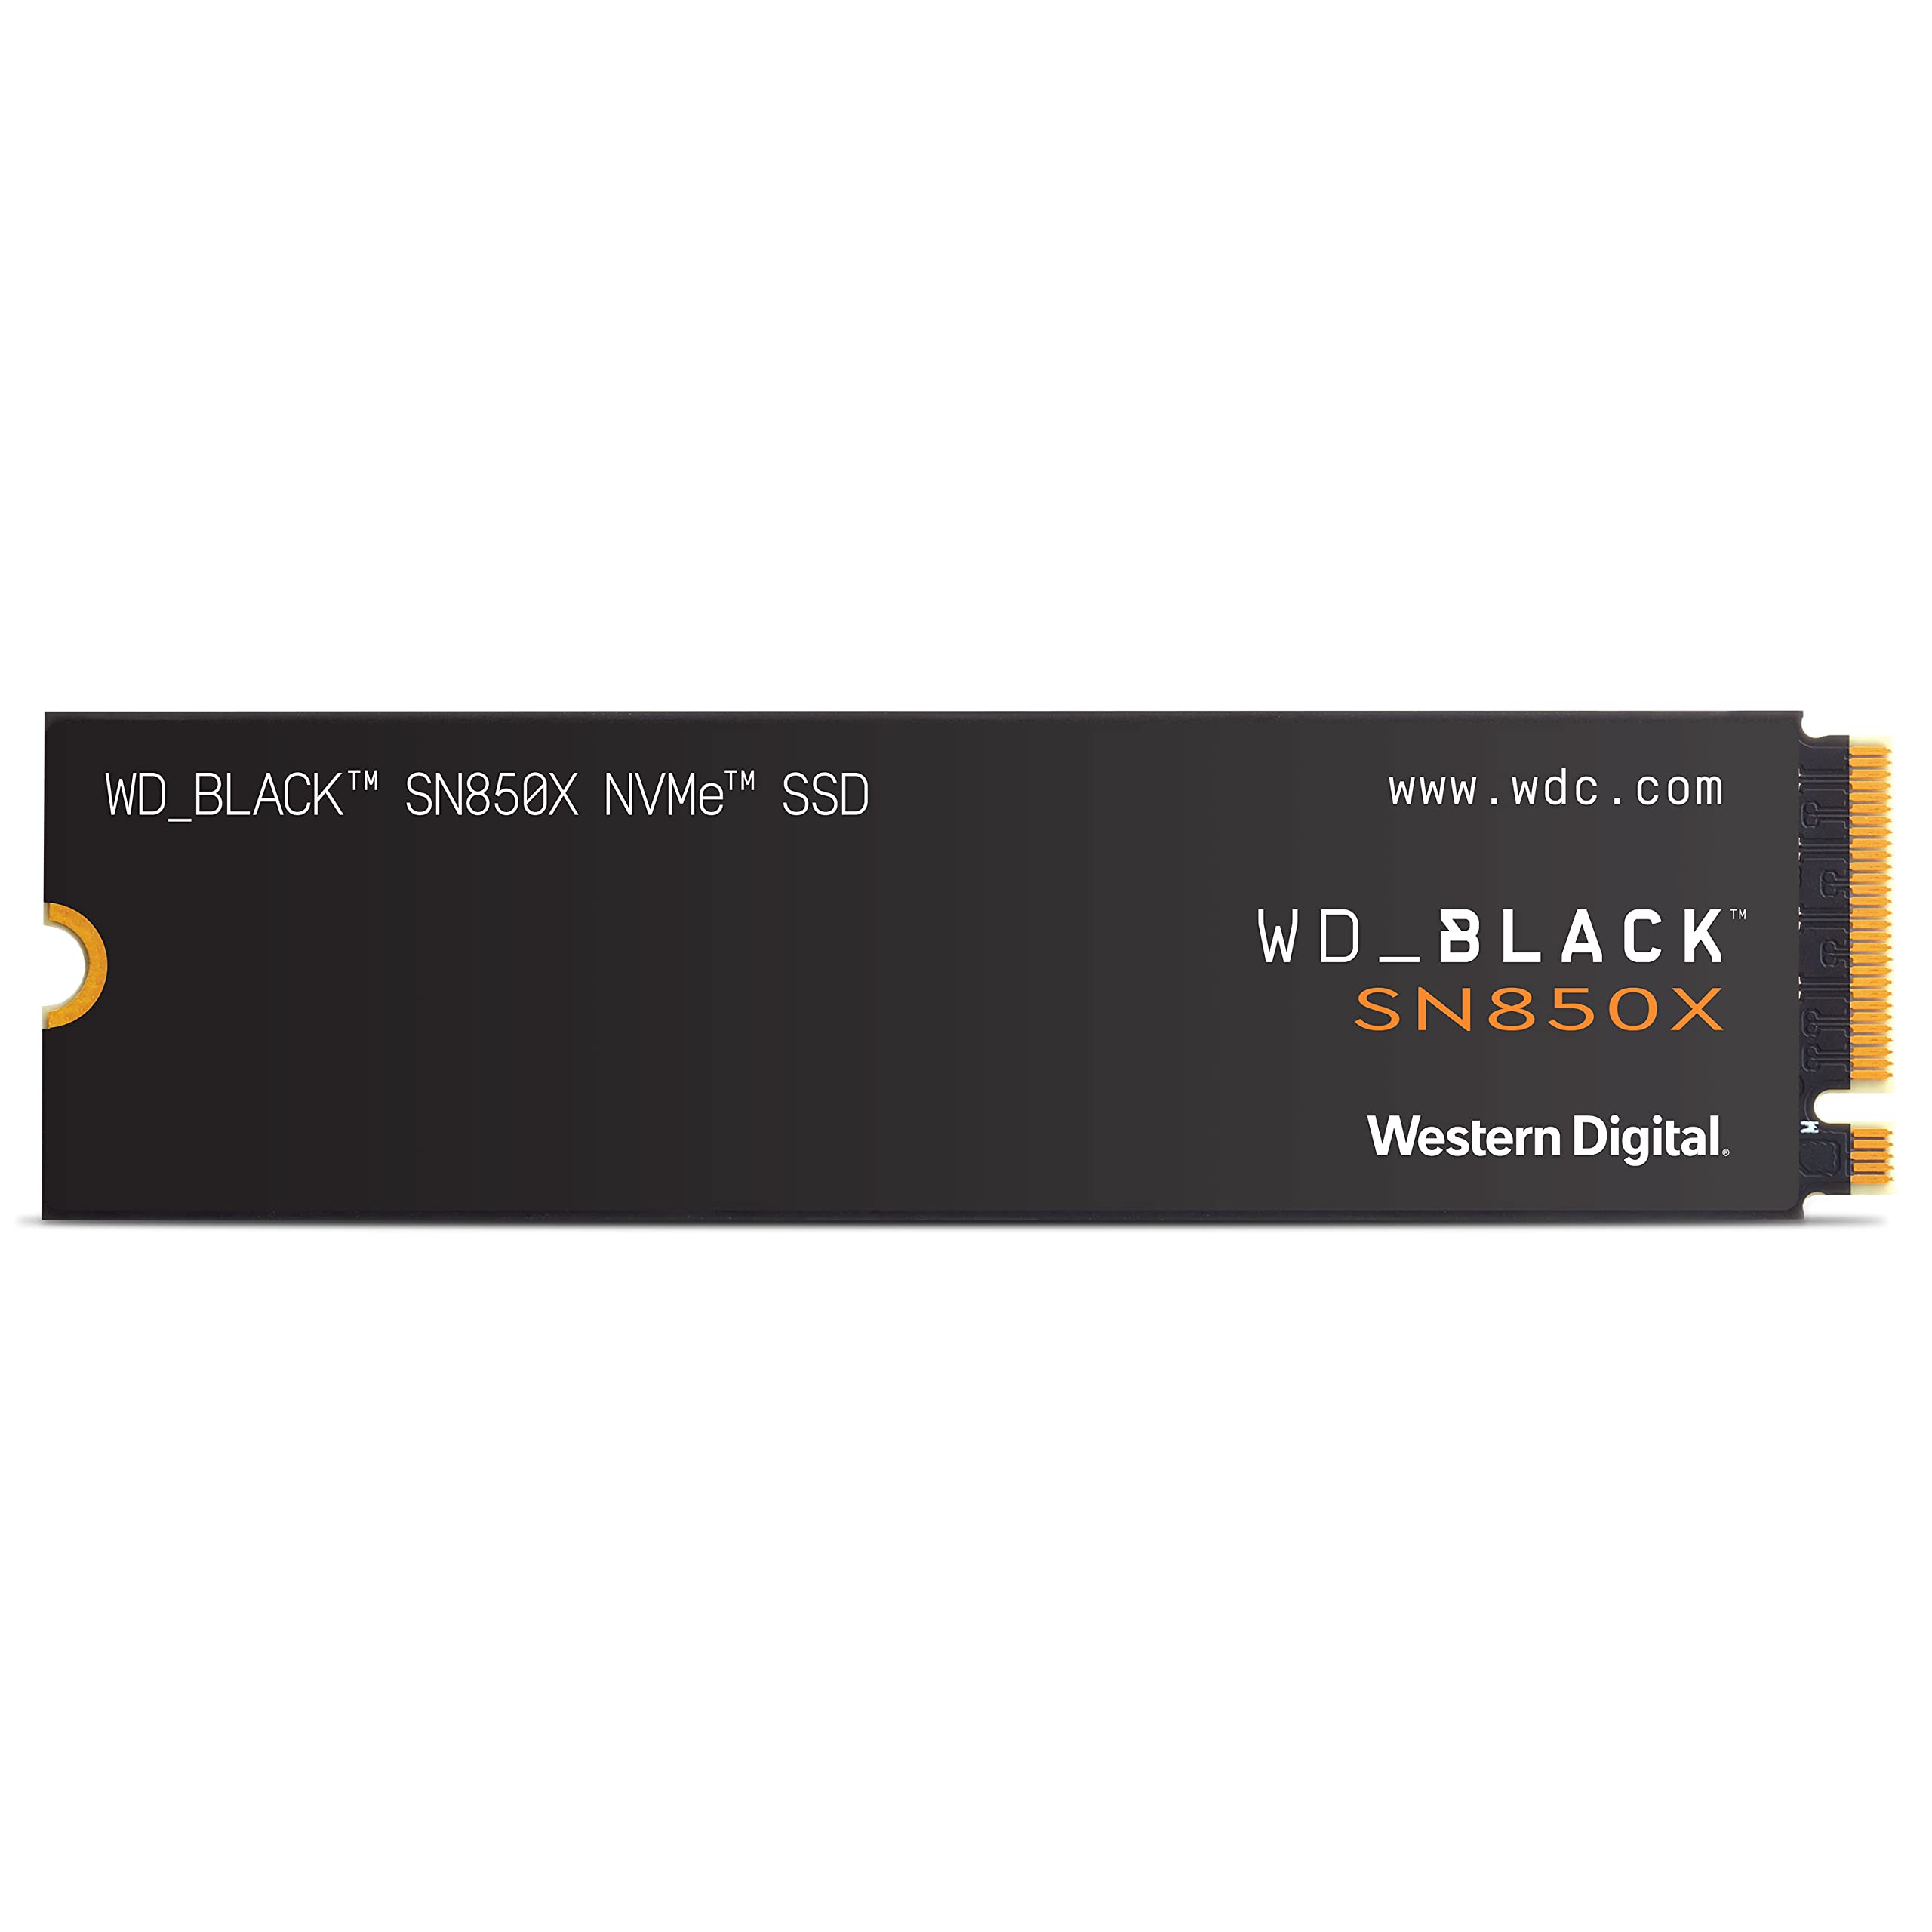 WD_BLACK 1TB SN850X NVMe Internal Gaming SSD $55